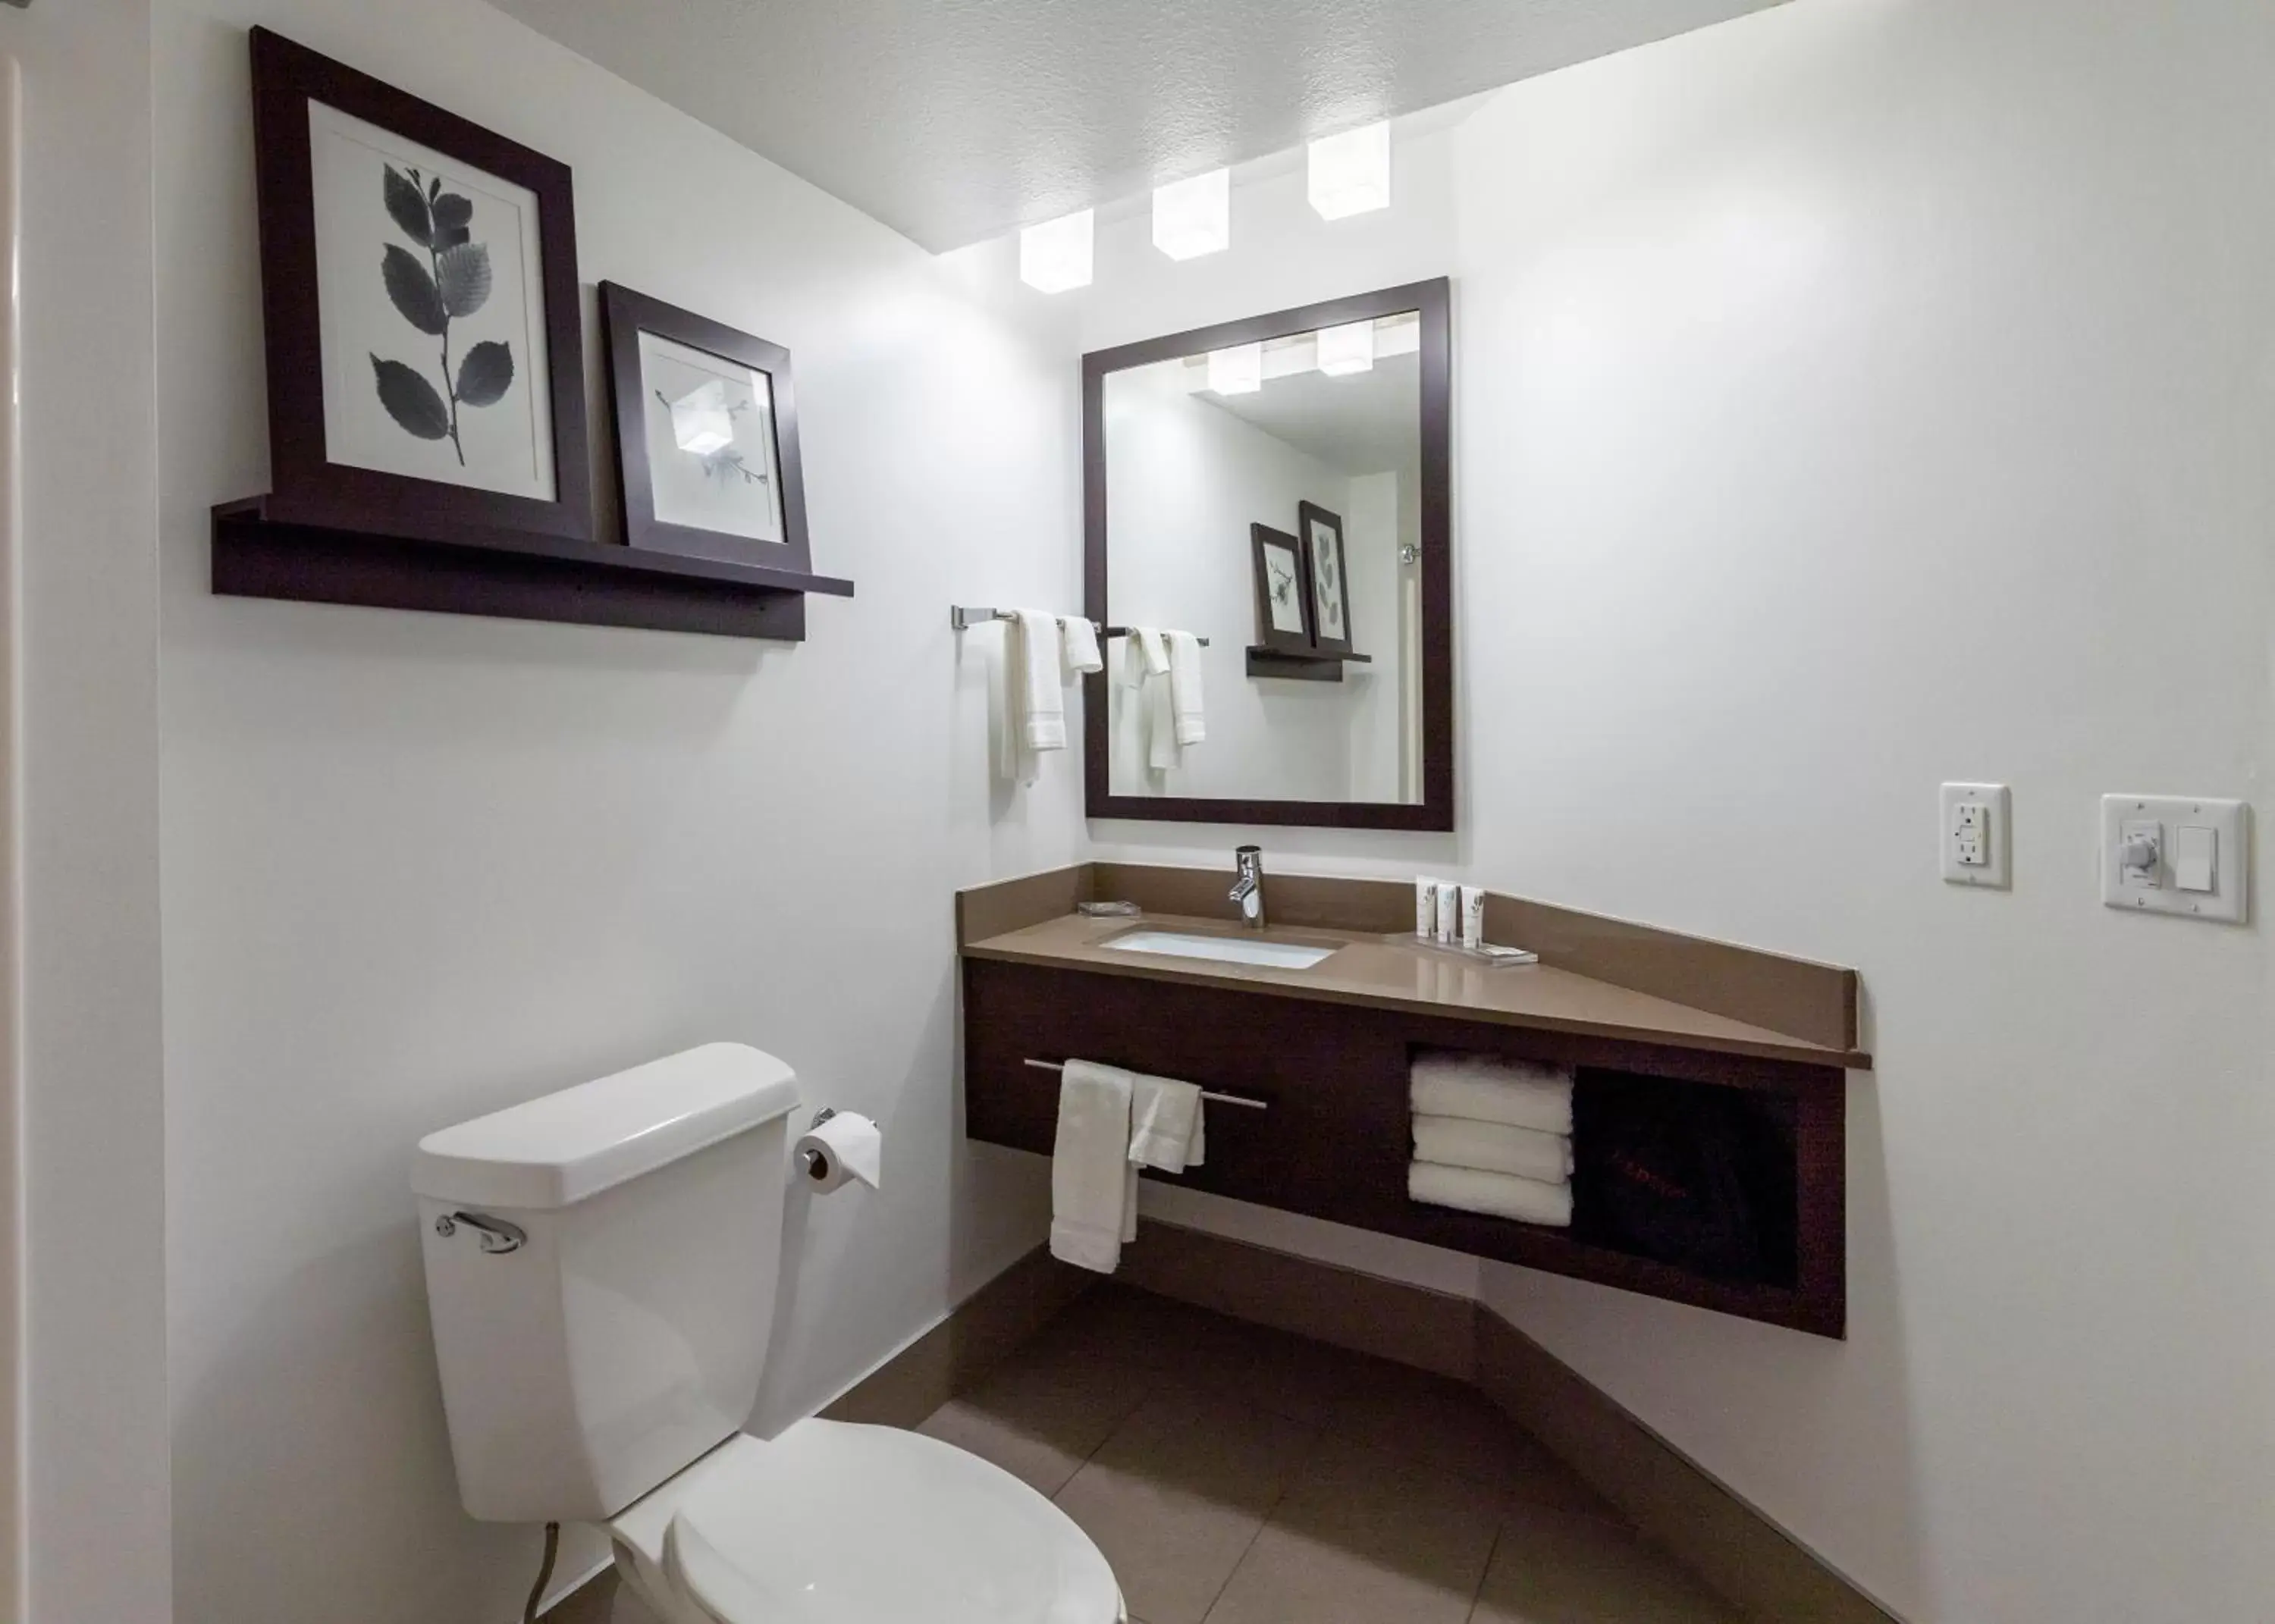 Bathroom in Country Inn & Suites by Radisson, Appleton, WI